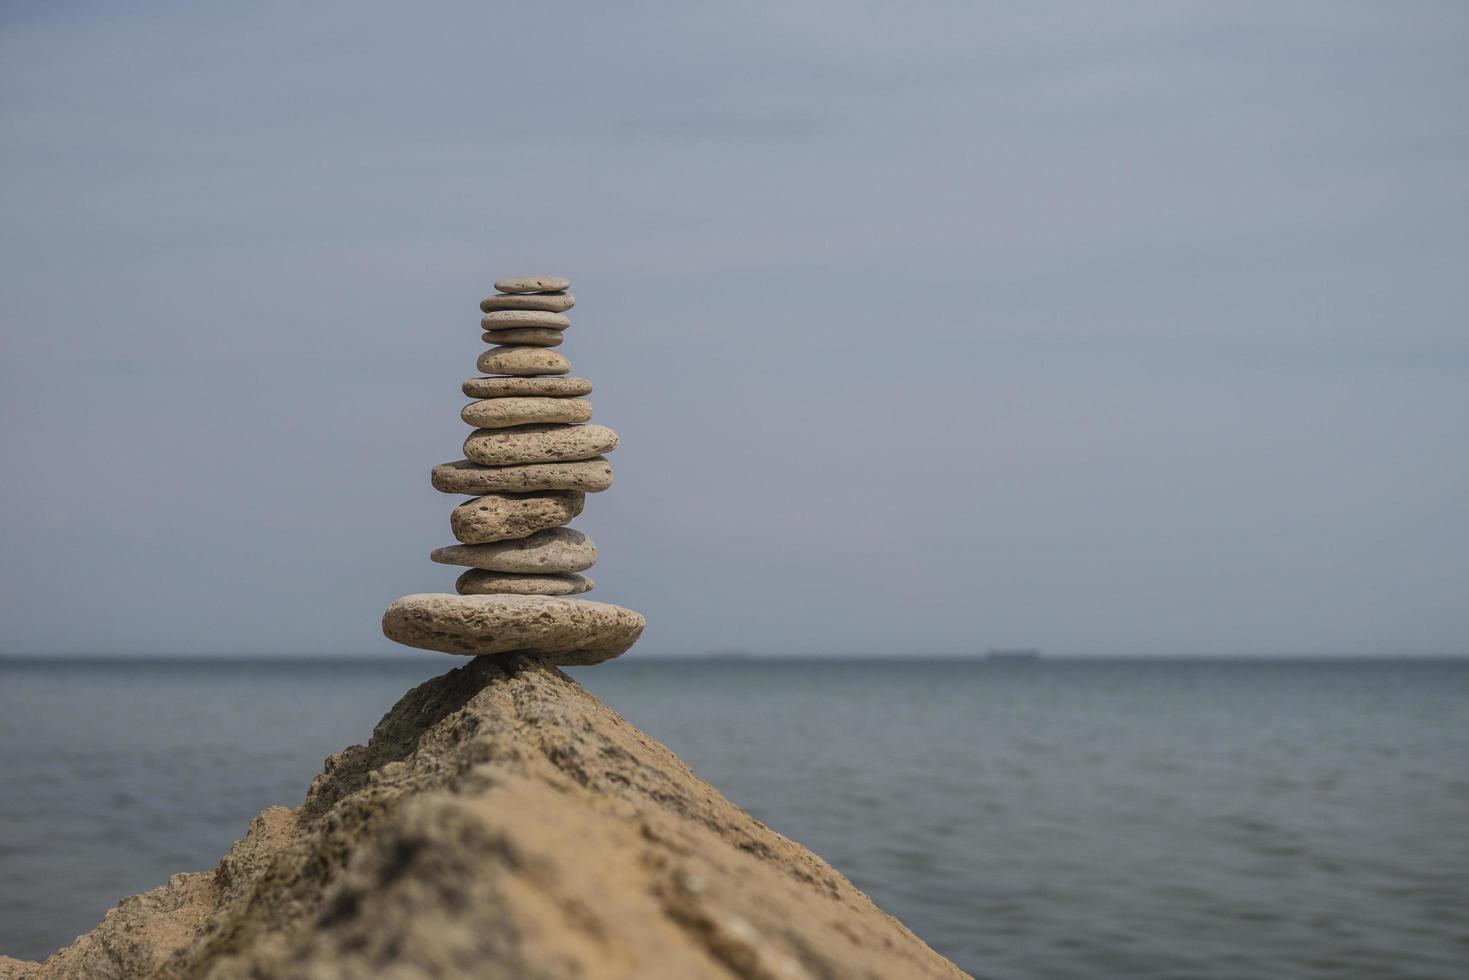 balancing pyramid of stones on a large stone on the seashore photo